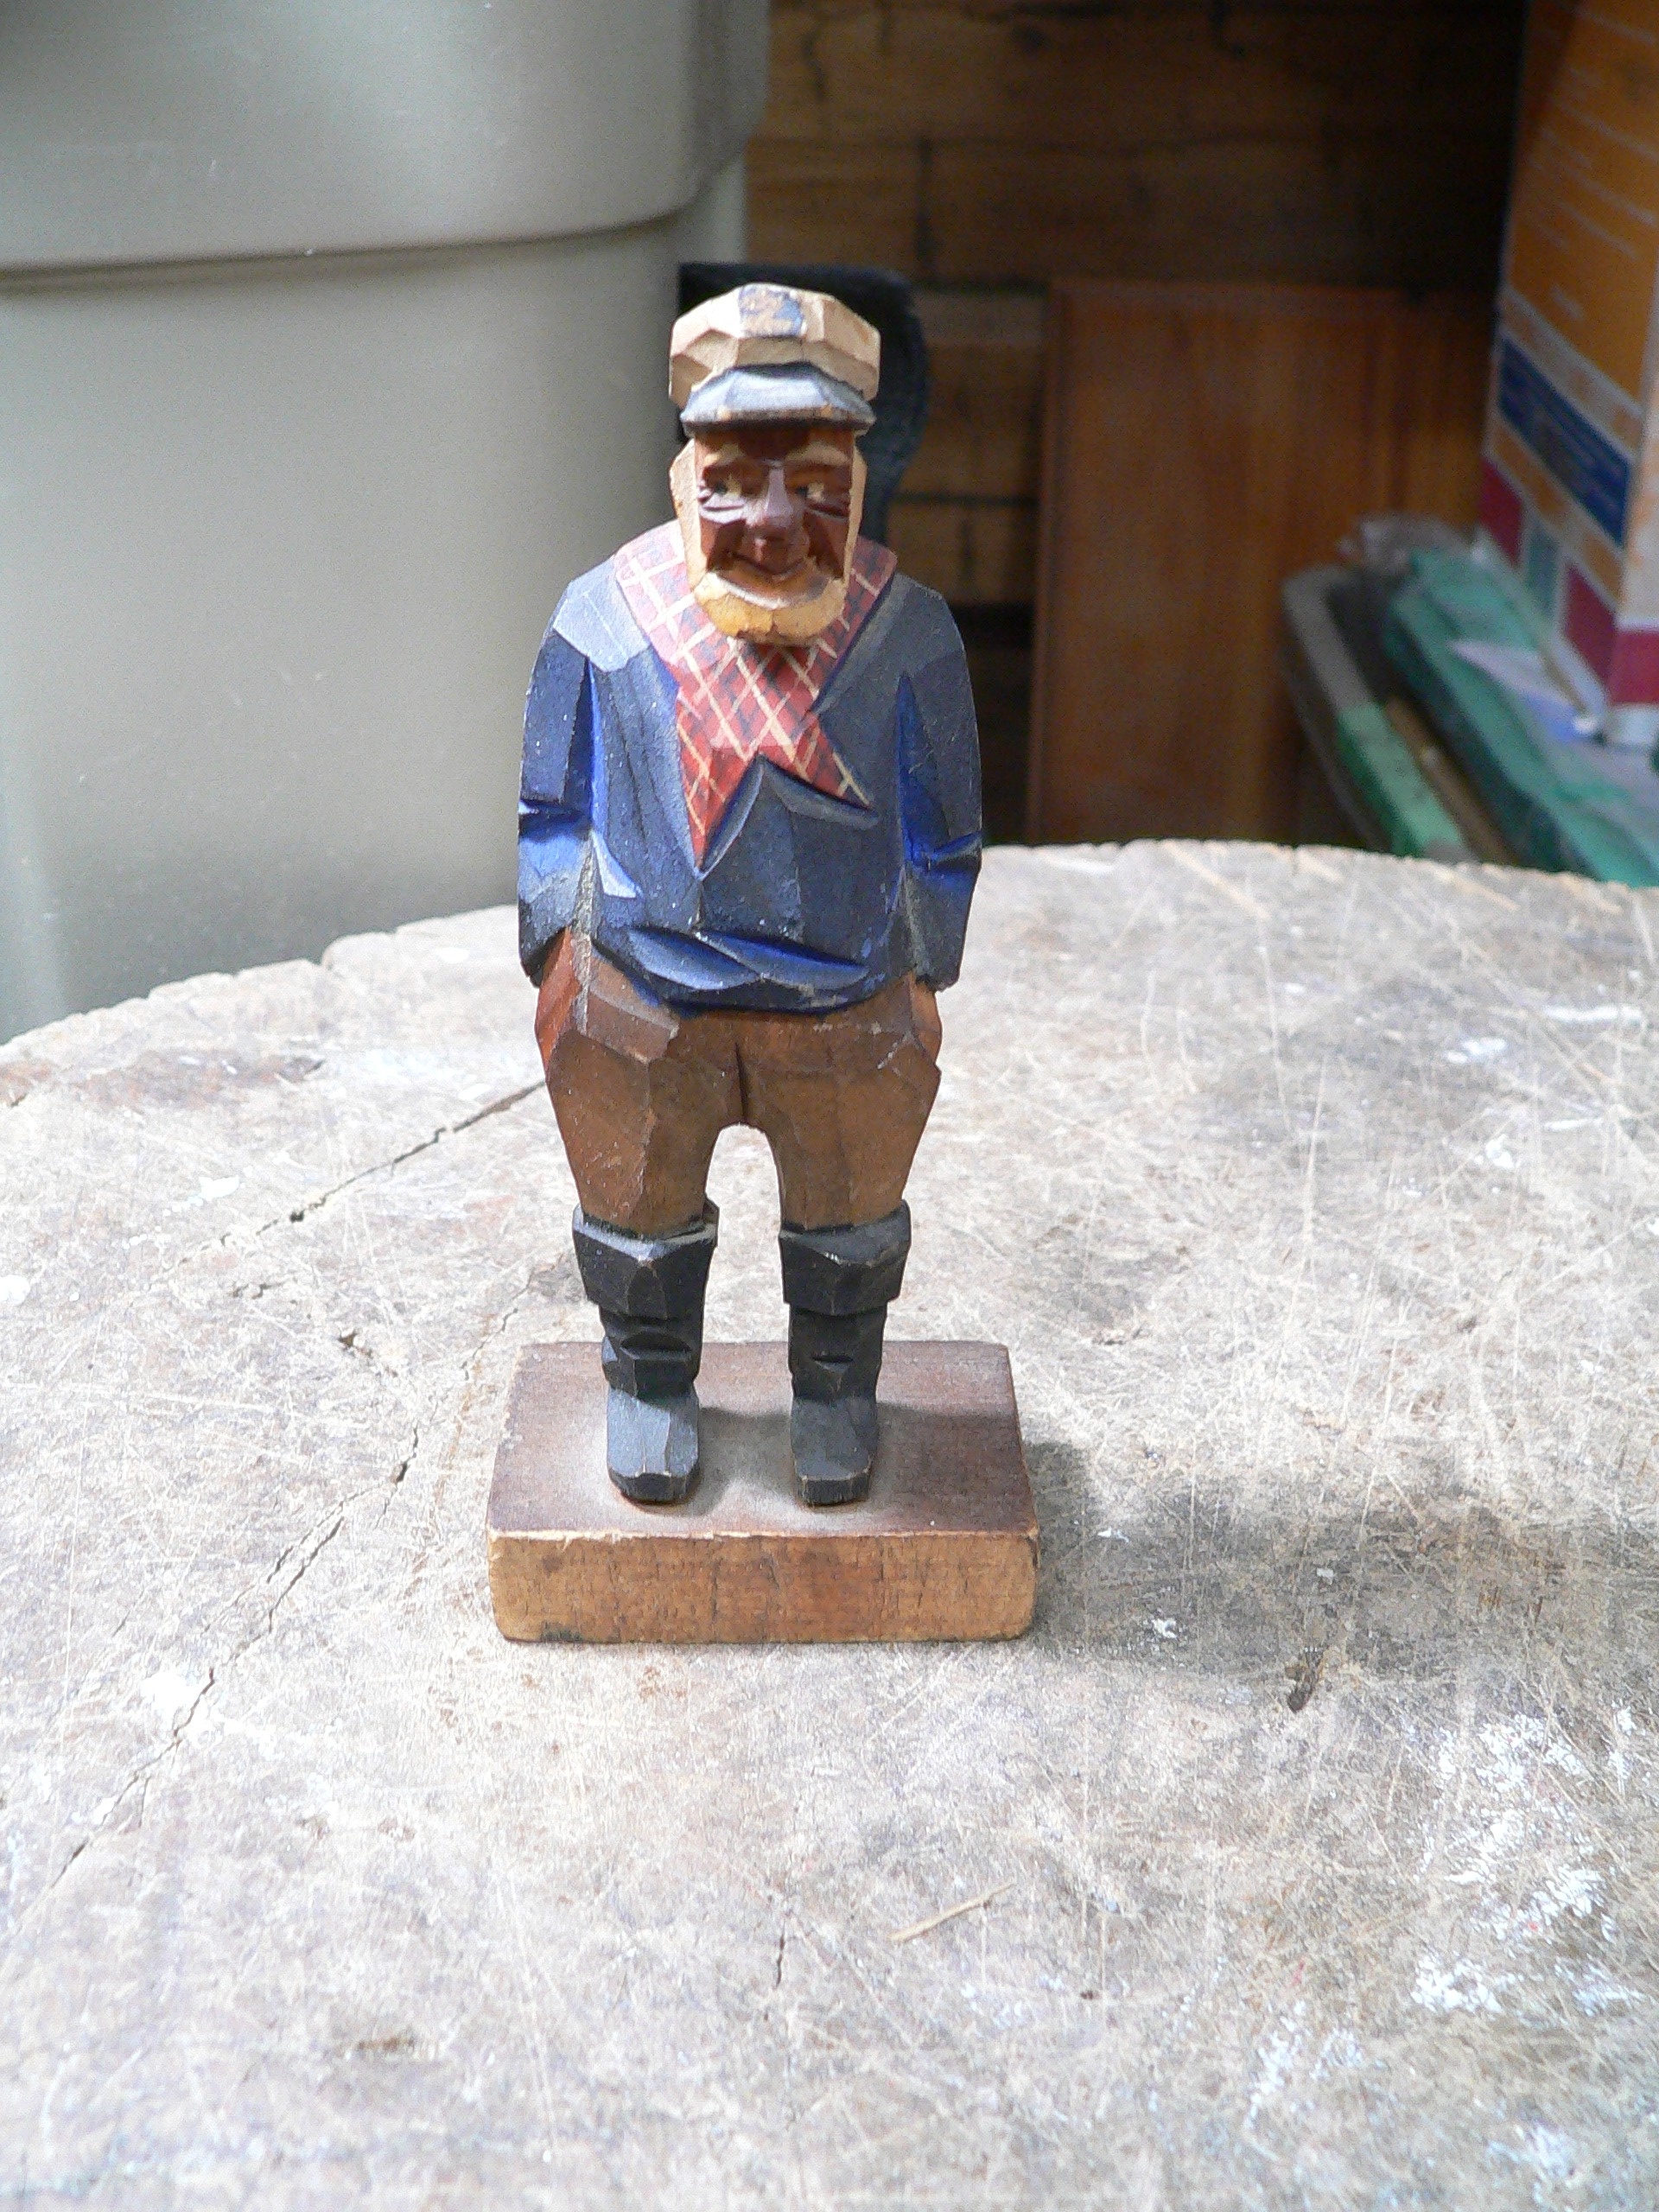 Capitaine sculpter # 9957.17 